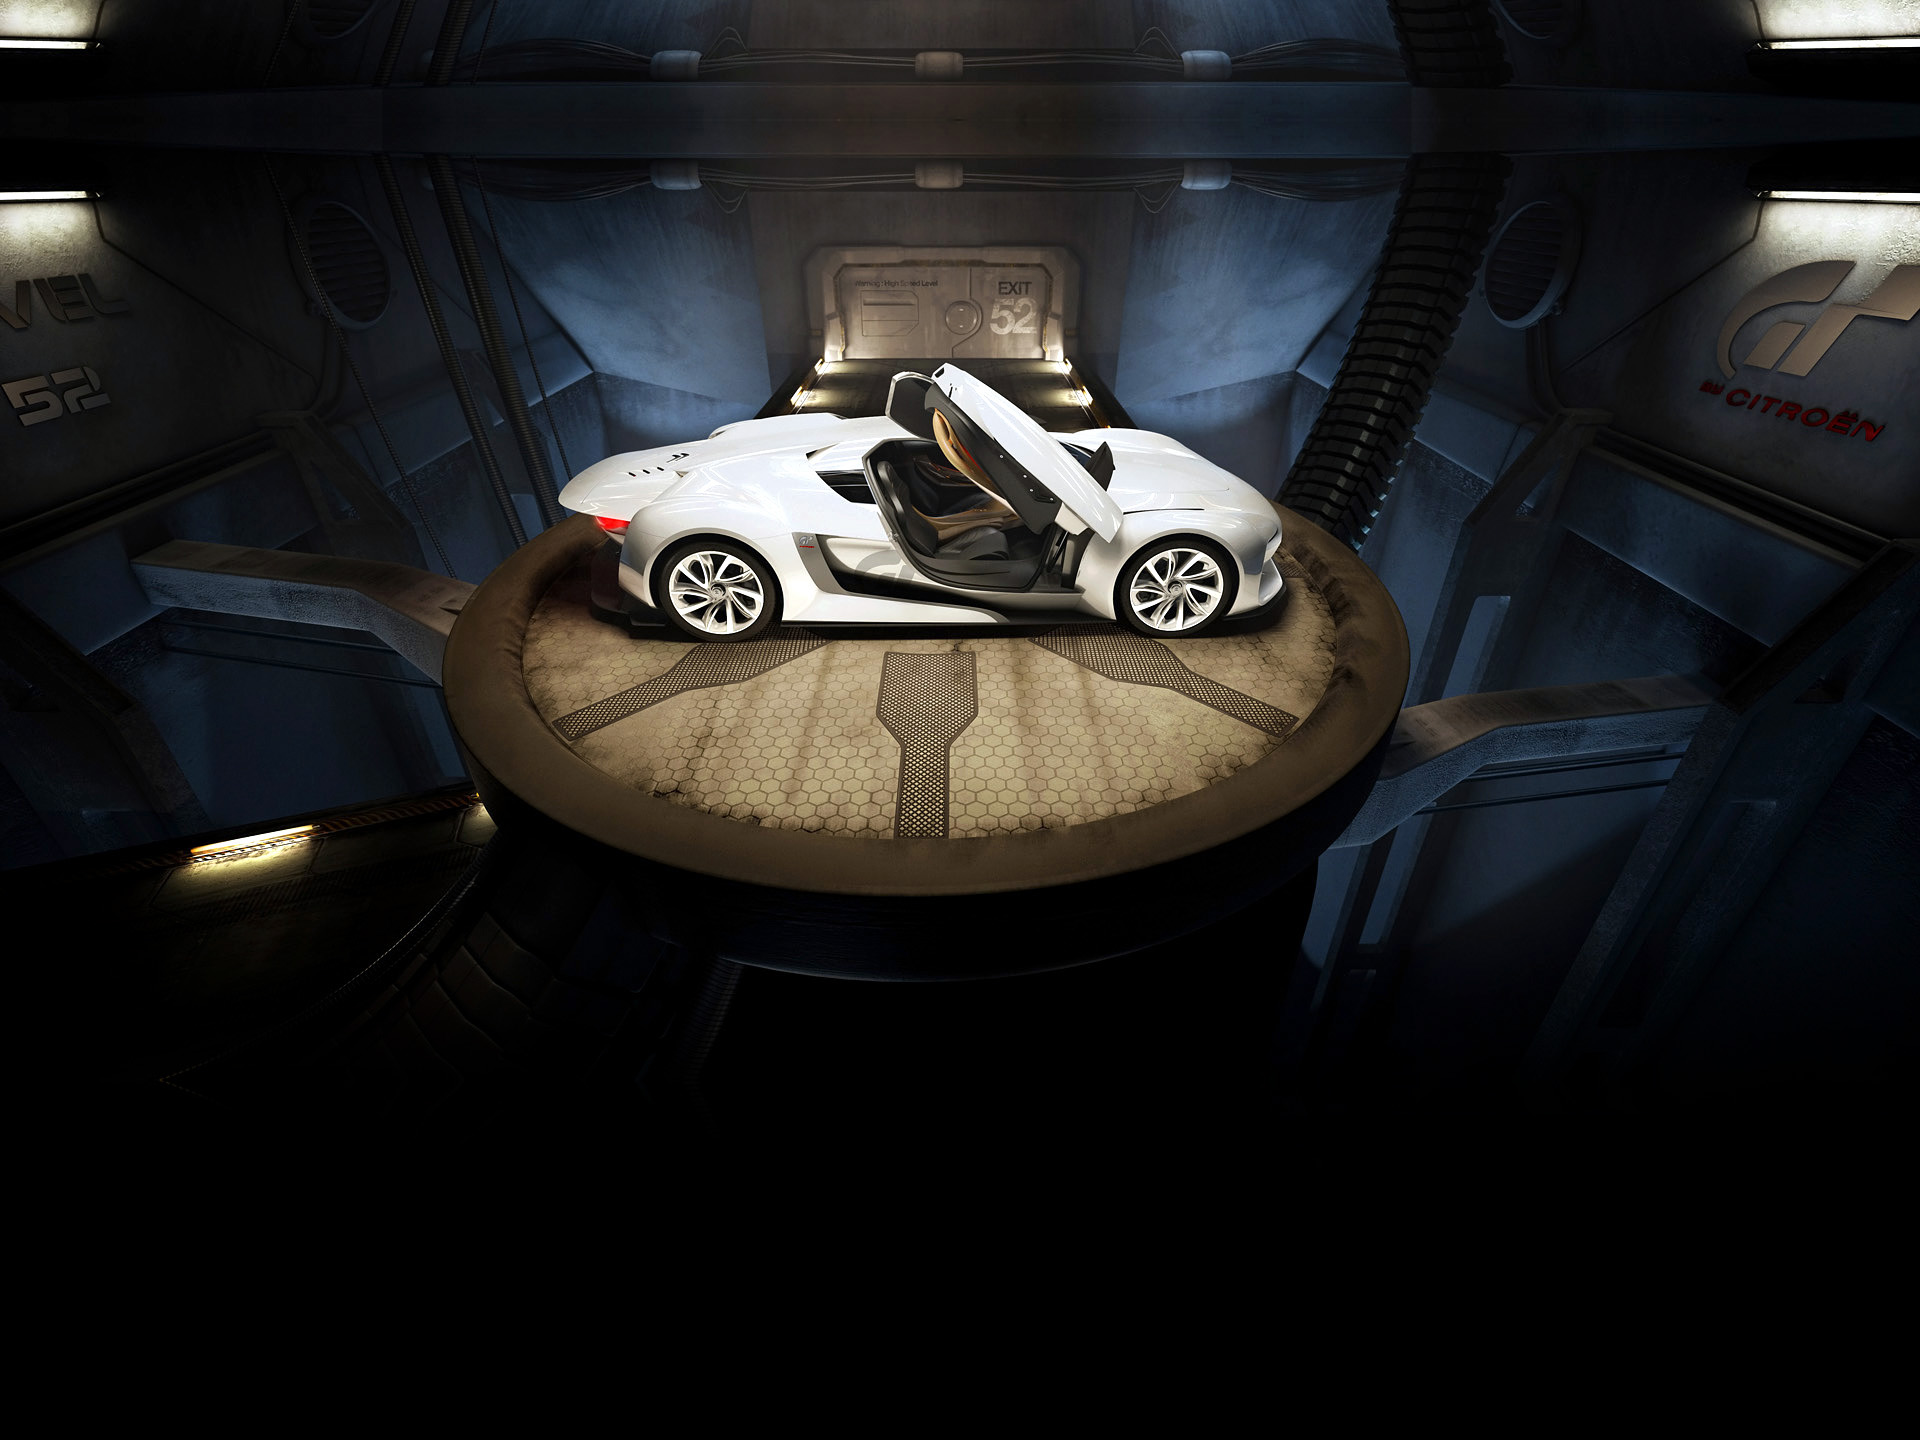 Vehicles Citroën GT concept HD Wallpaper | Background Image